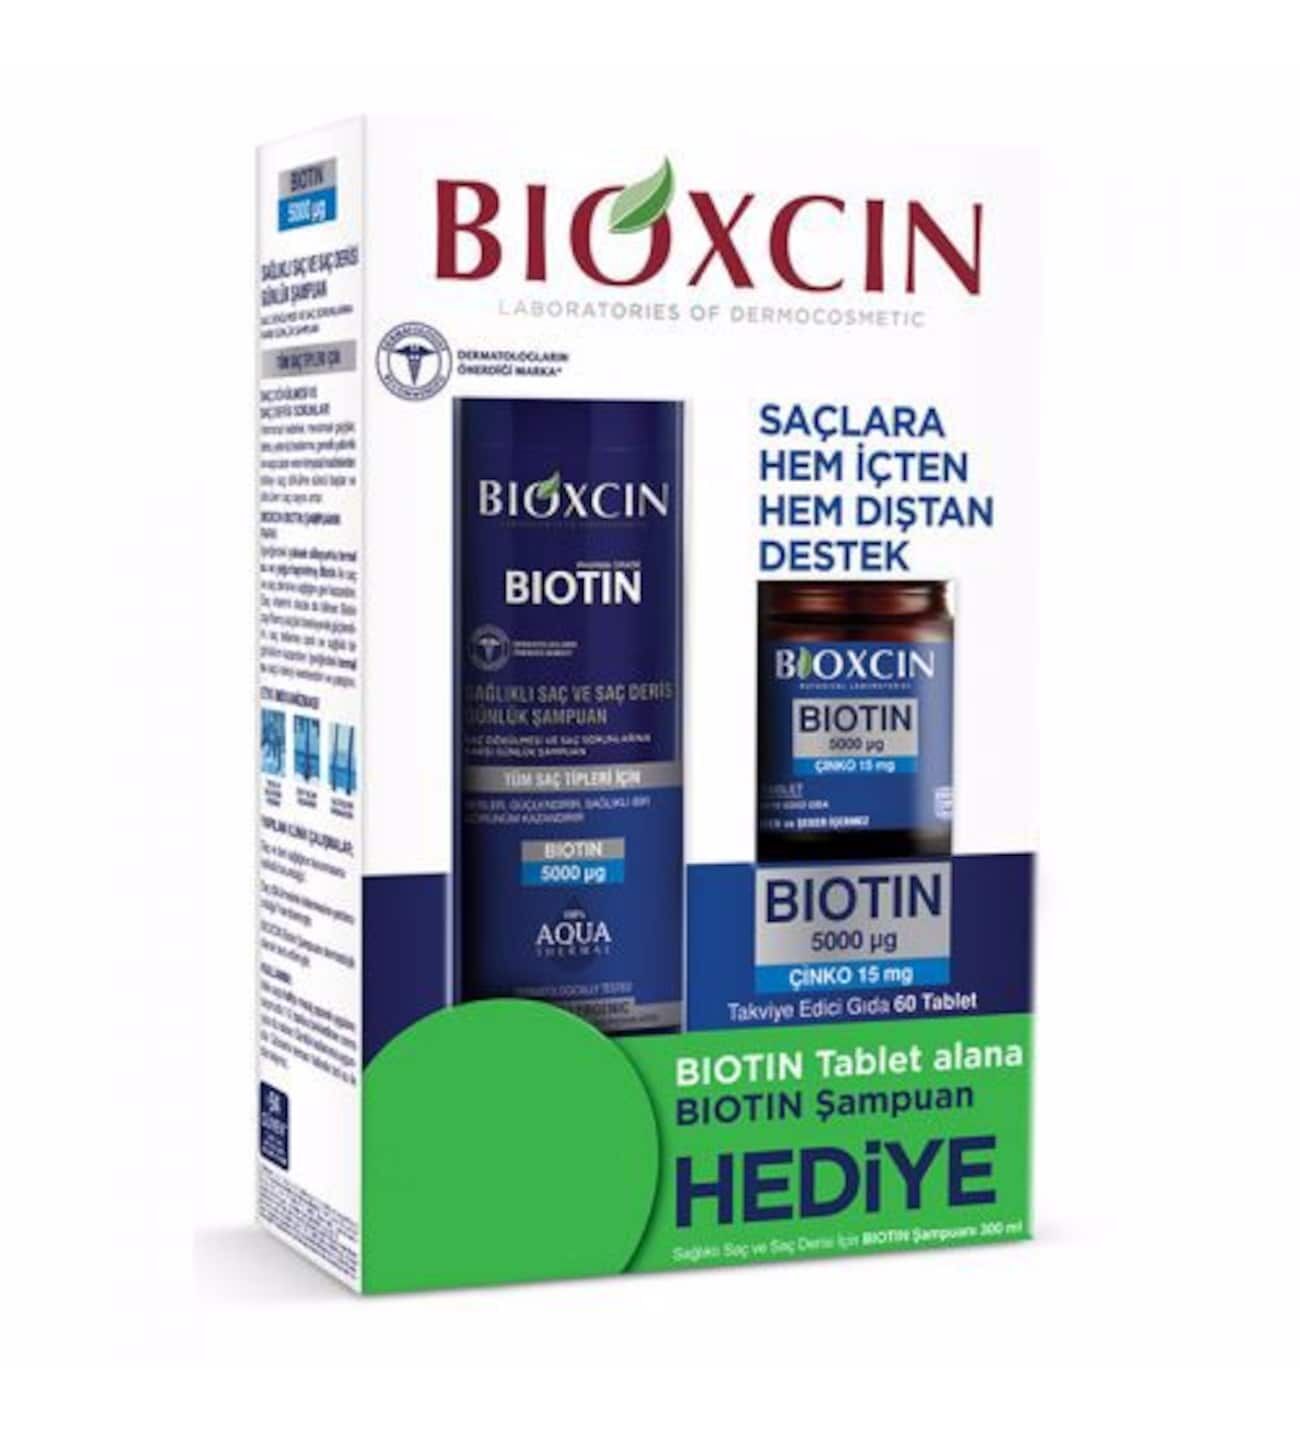 Bioxcin Biotin 5000 mg + Çinko 15 mg 60 Tablet + 300 ml Şampuan Hediyeli (139,90 TL Etiketli)